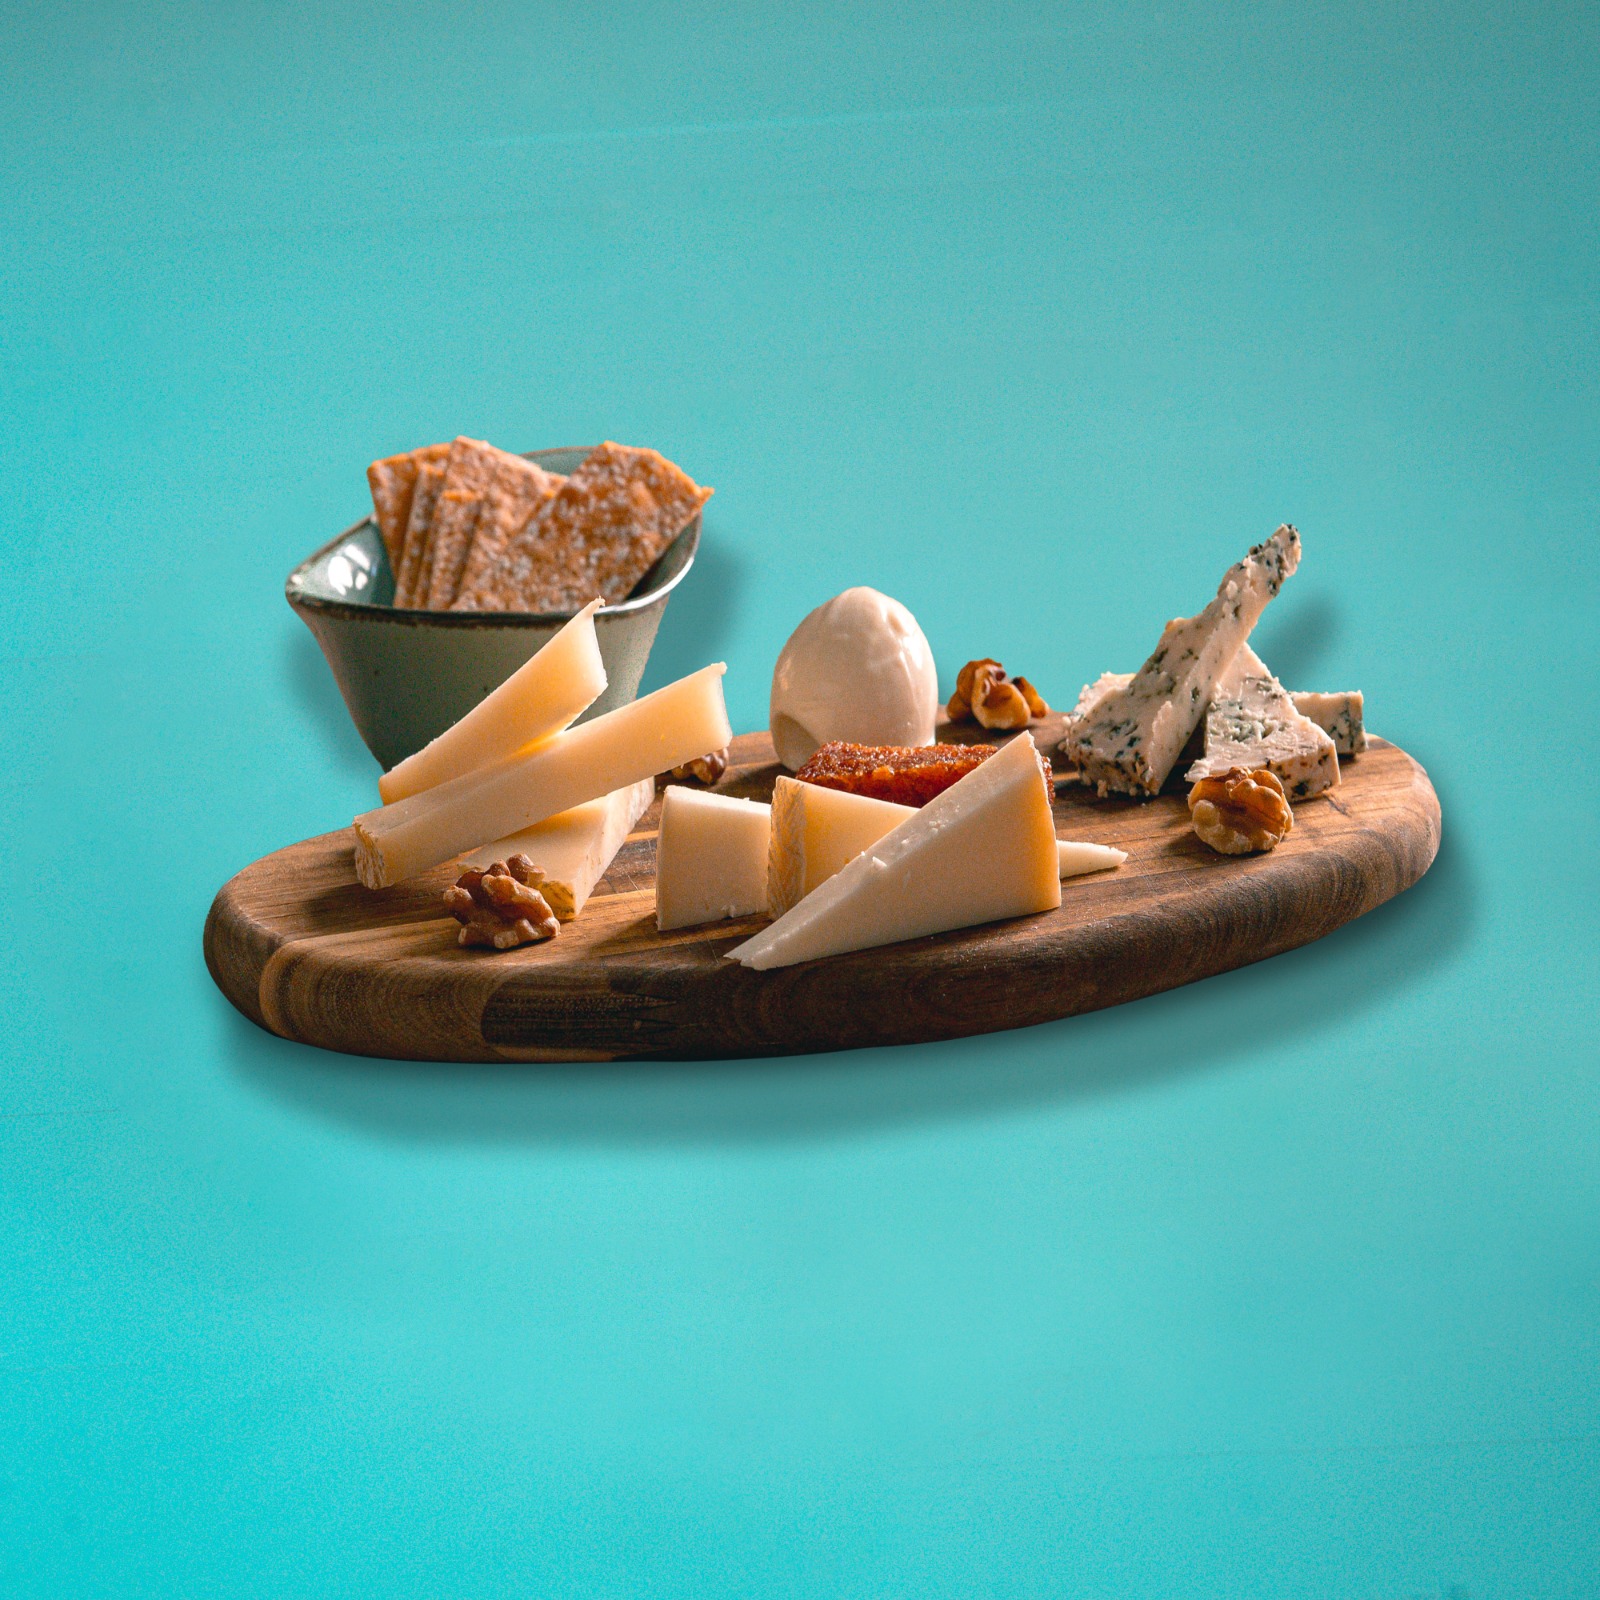 Sierra cheese table